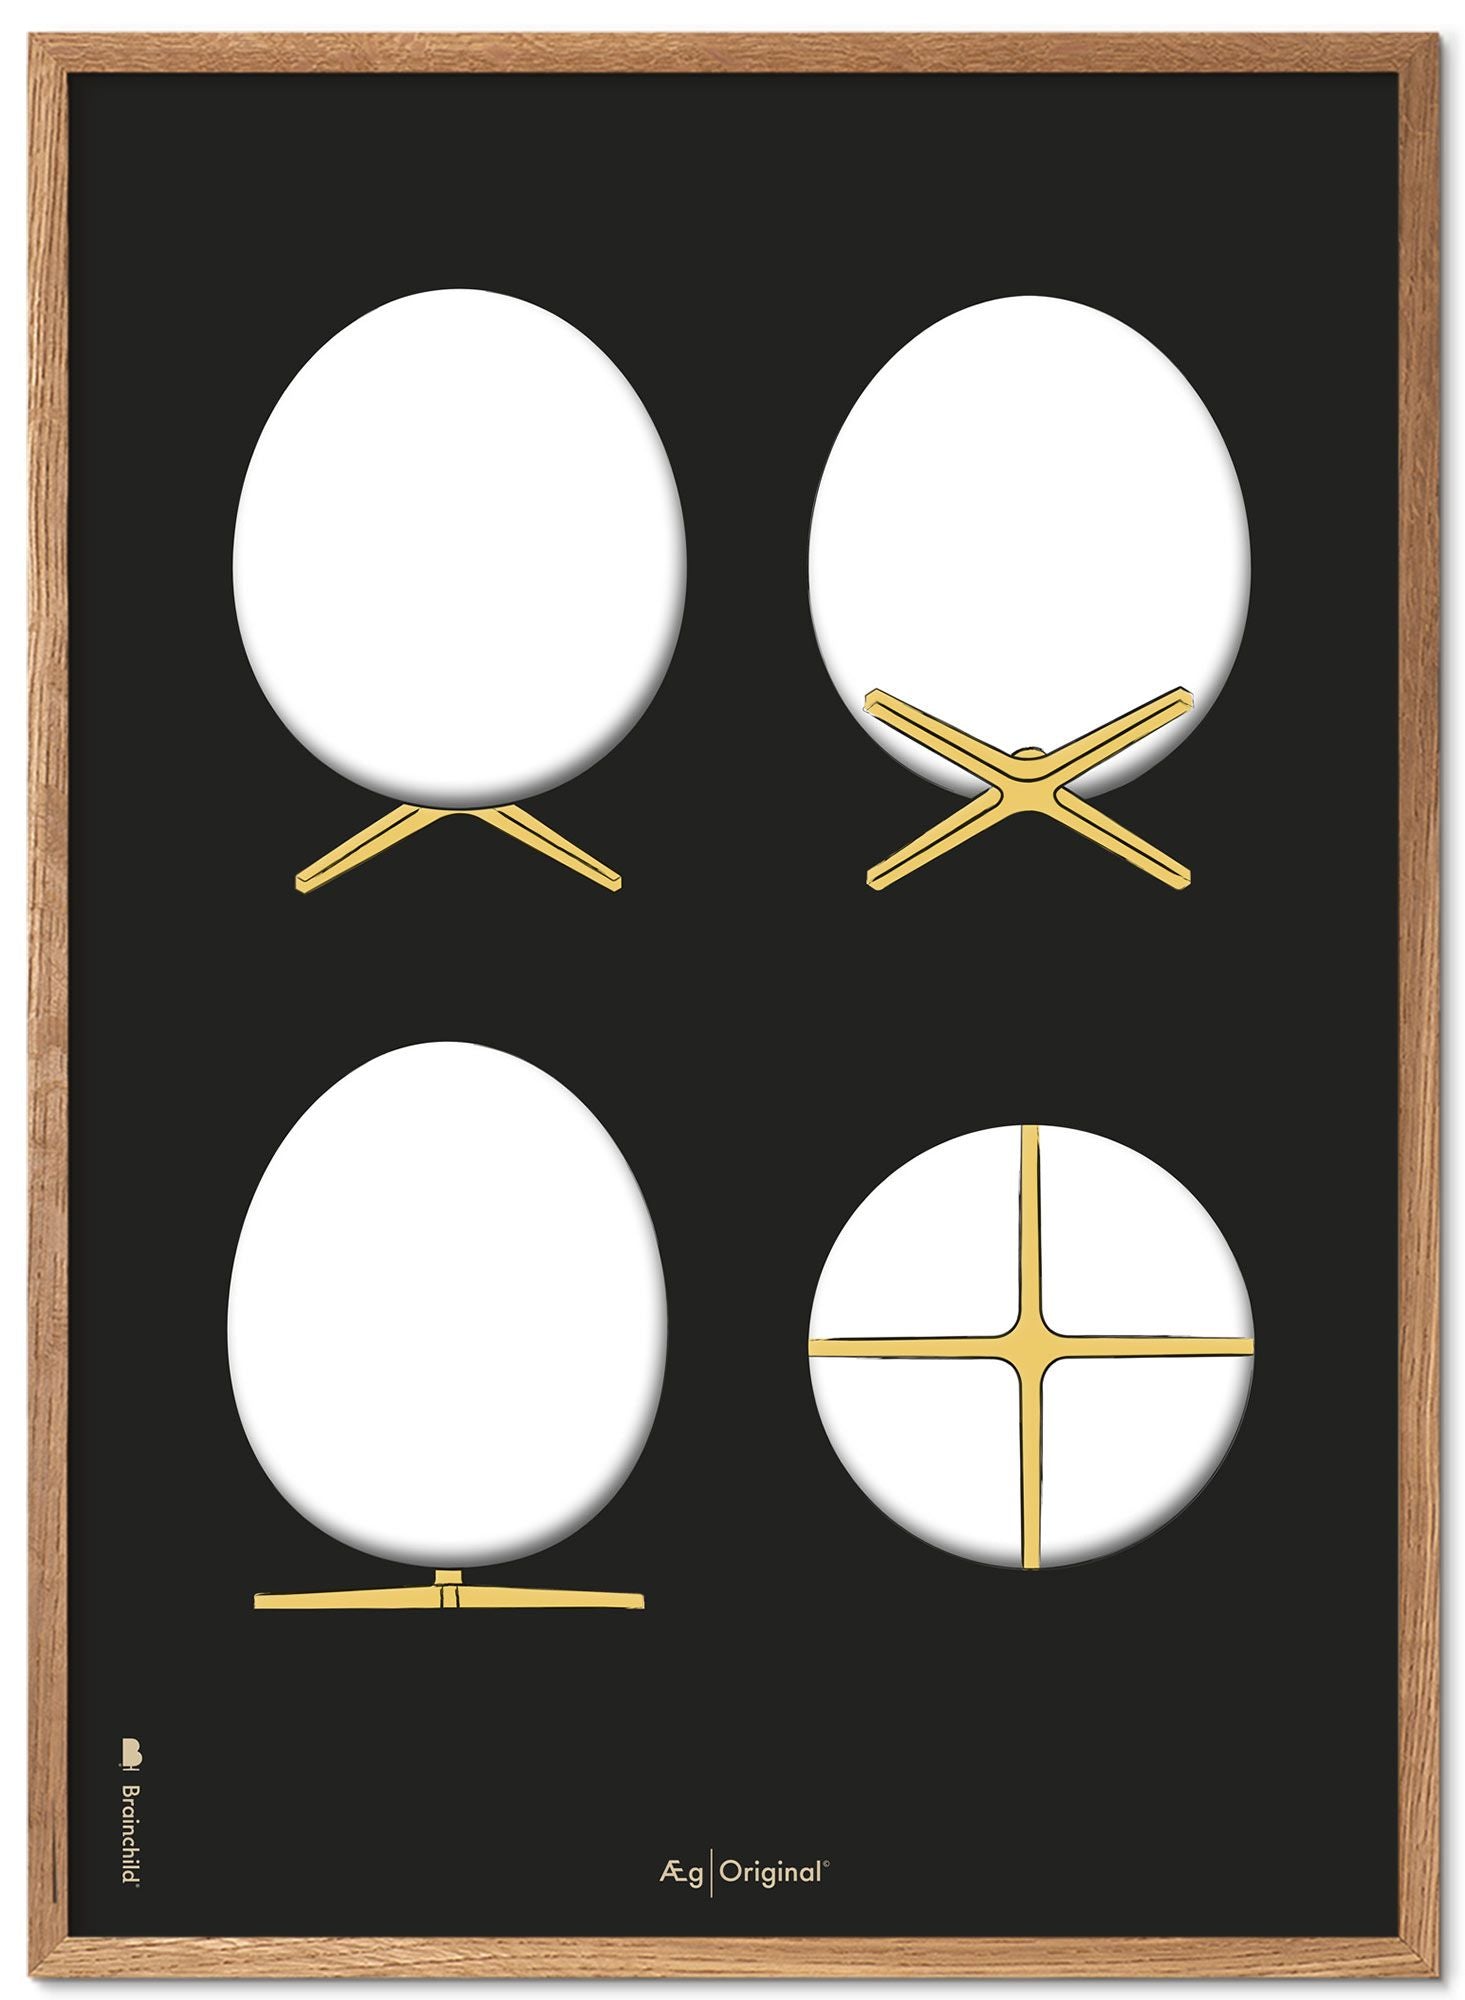 Brainchild The Egg Design Sketches Julisteen kehys vaaleasta puusta 30x40 cm, musta tausta